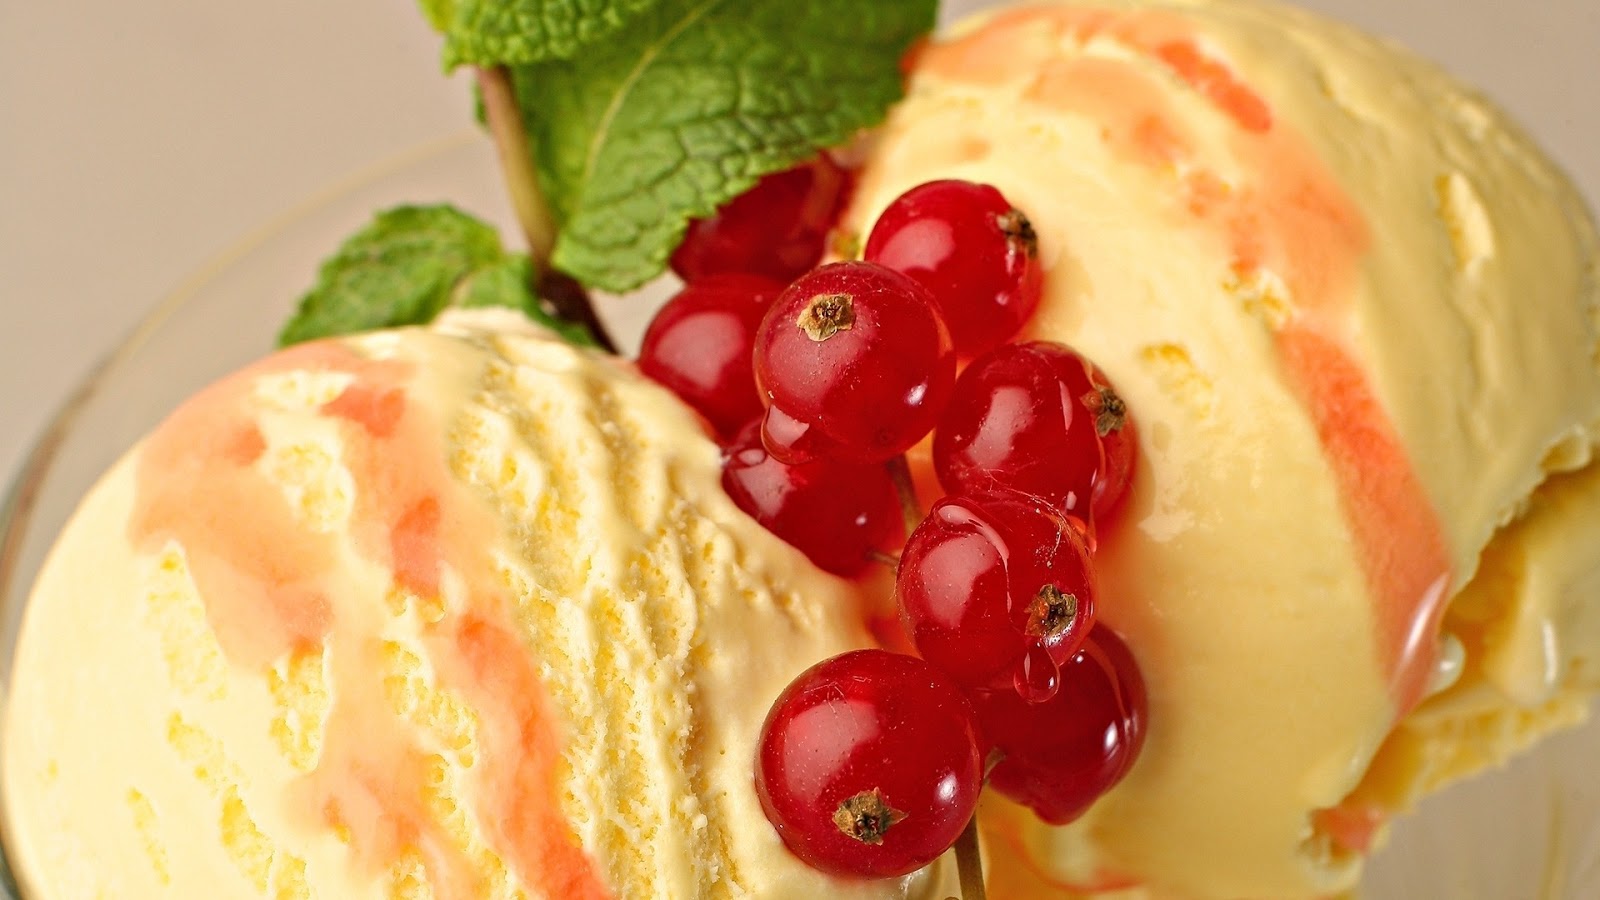 Red Berries On Ice Cream - Ice Cream Hd Wallpaper For Desktop - HD Wallpaper 